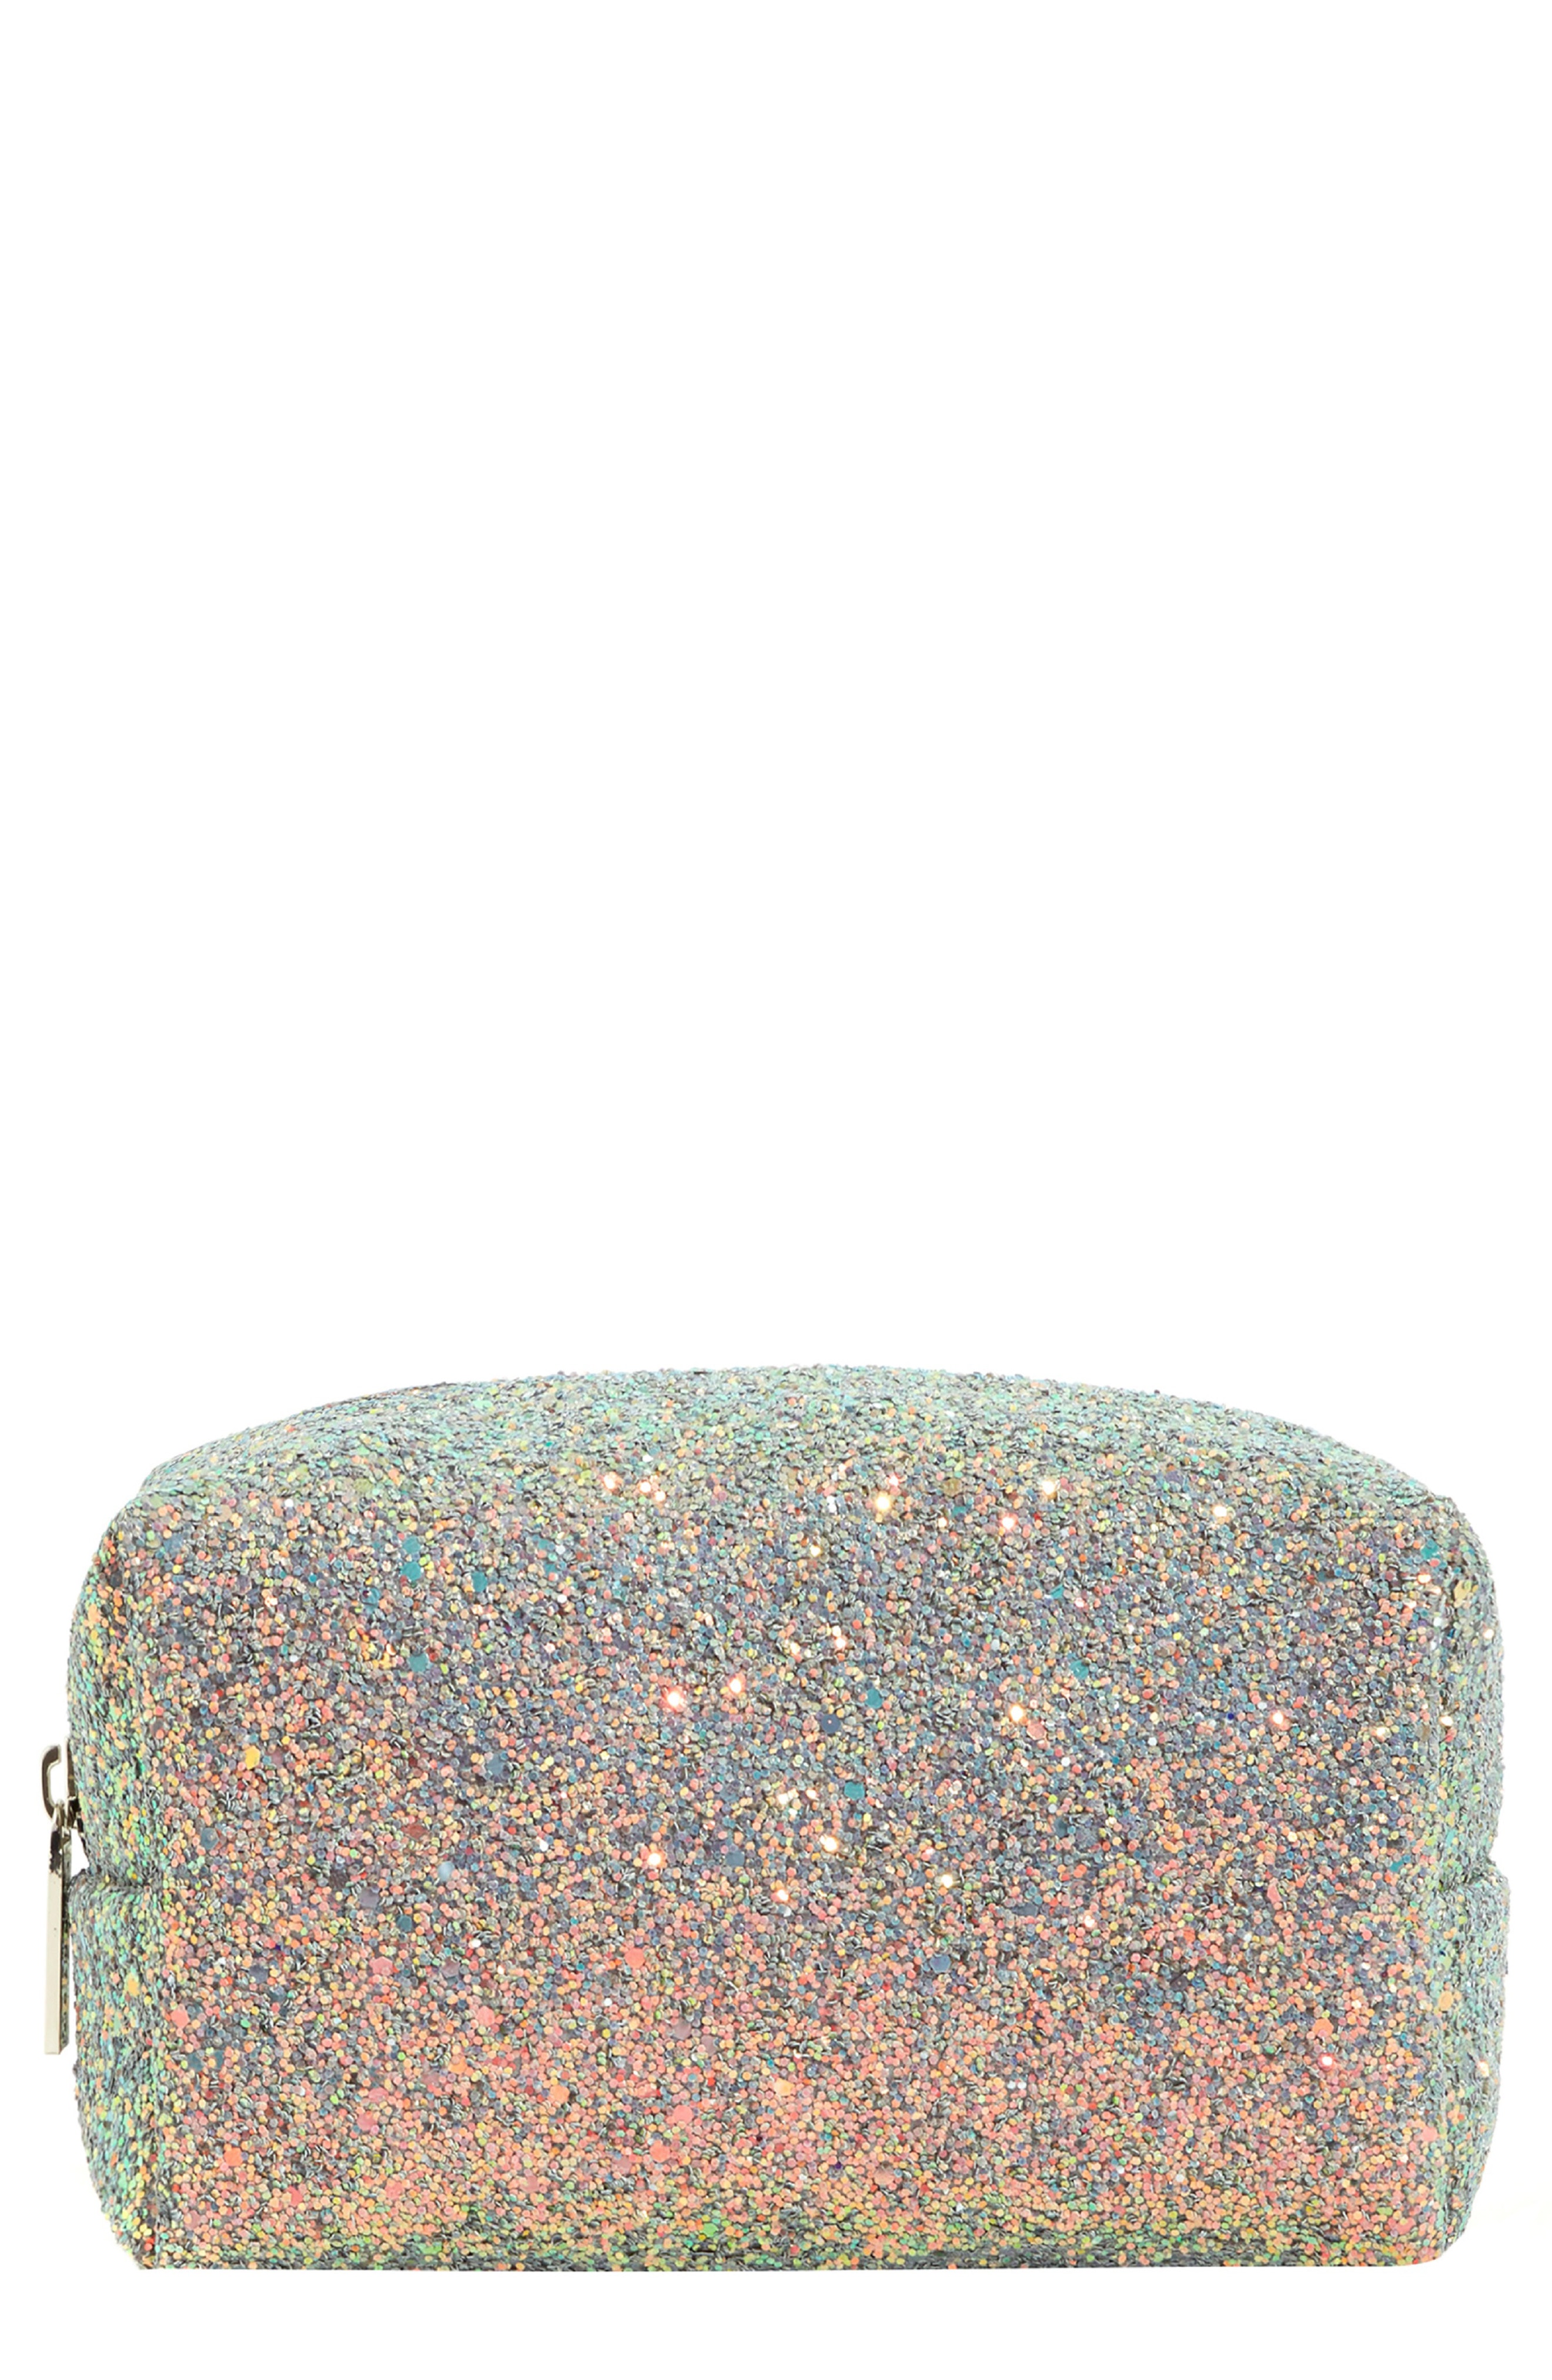 SkinnyDip Crescent Teal Glitter Makeup Bag